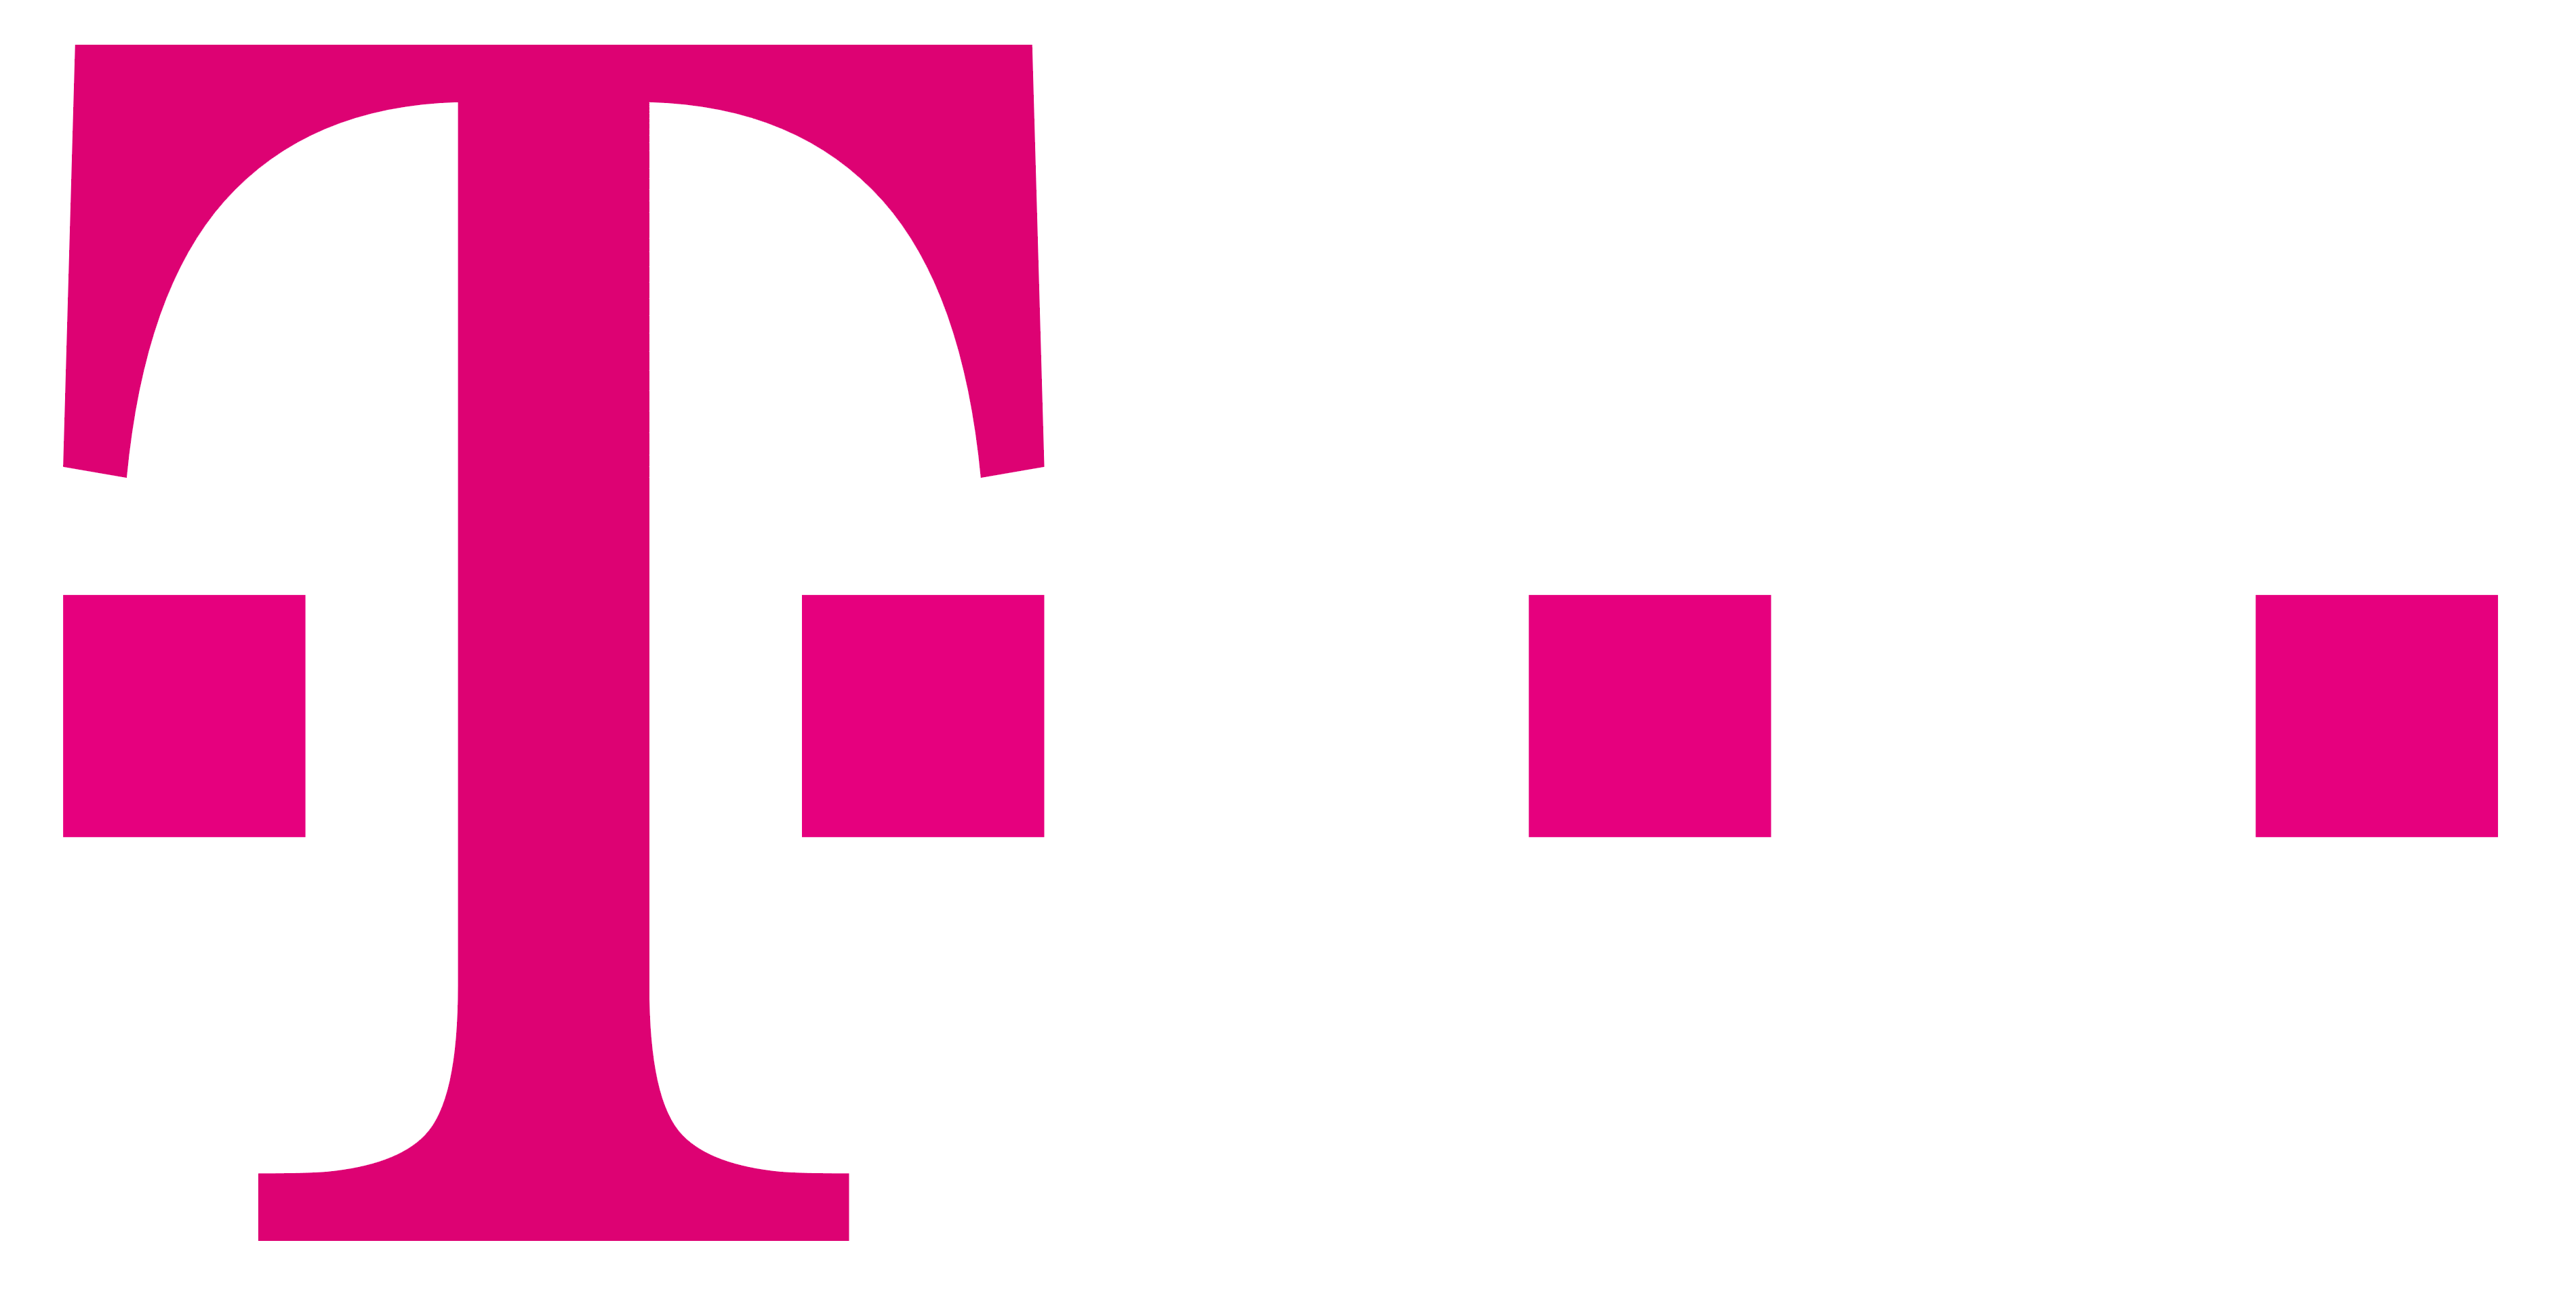 Deutsche Telekom Logo PNG HD Quality